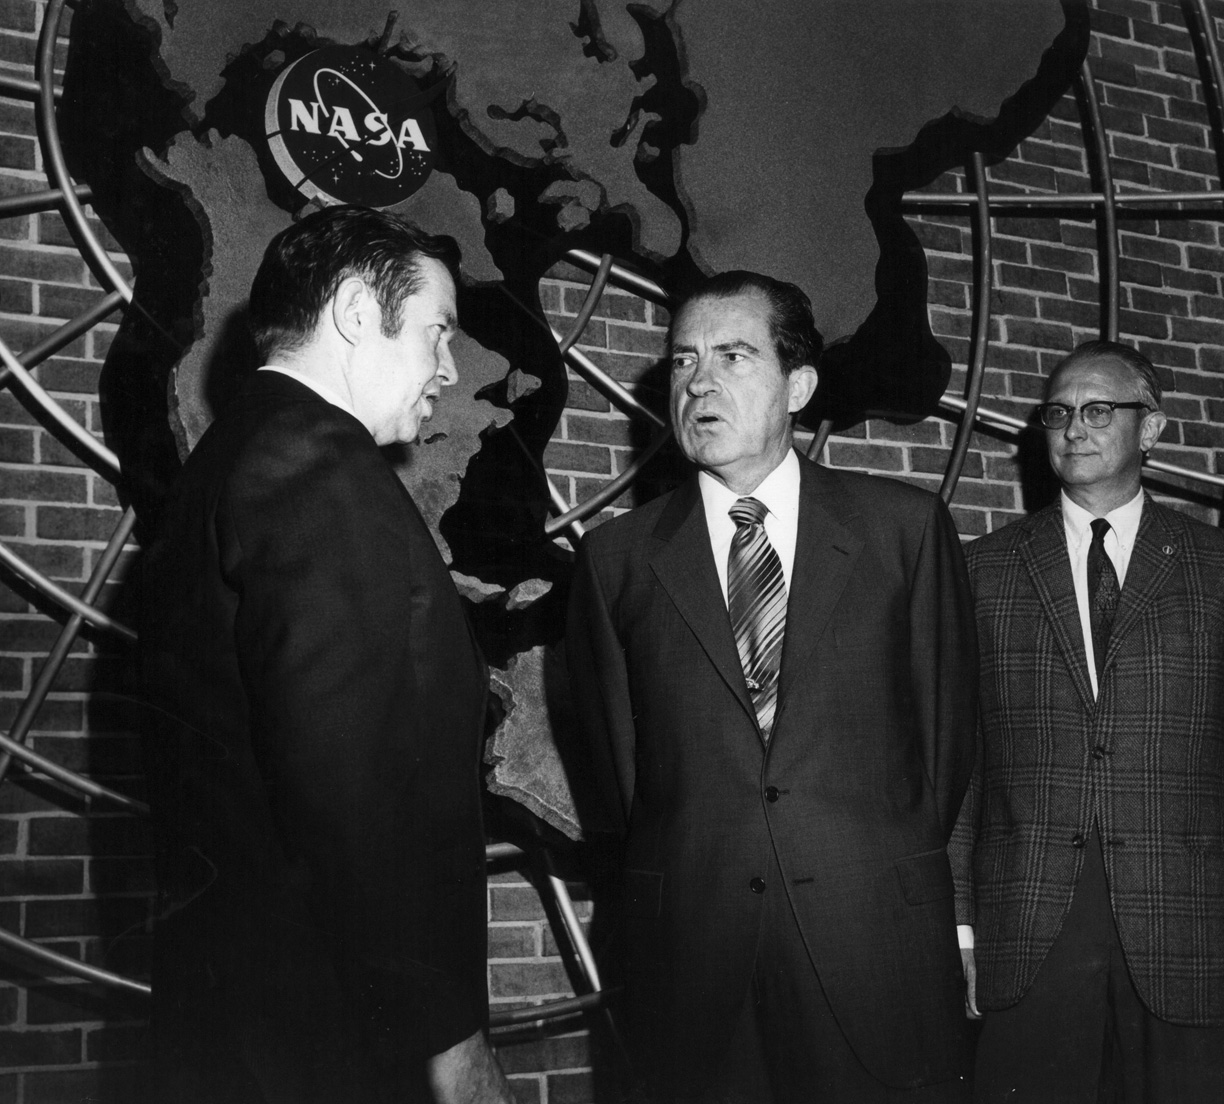 Clark greets Nixon in front of the NASA logo